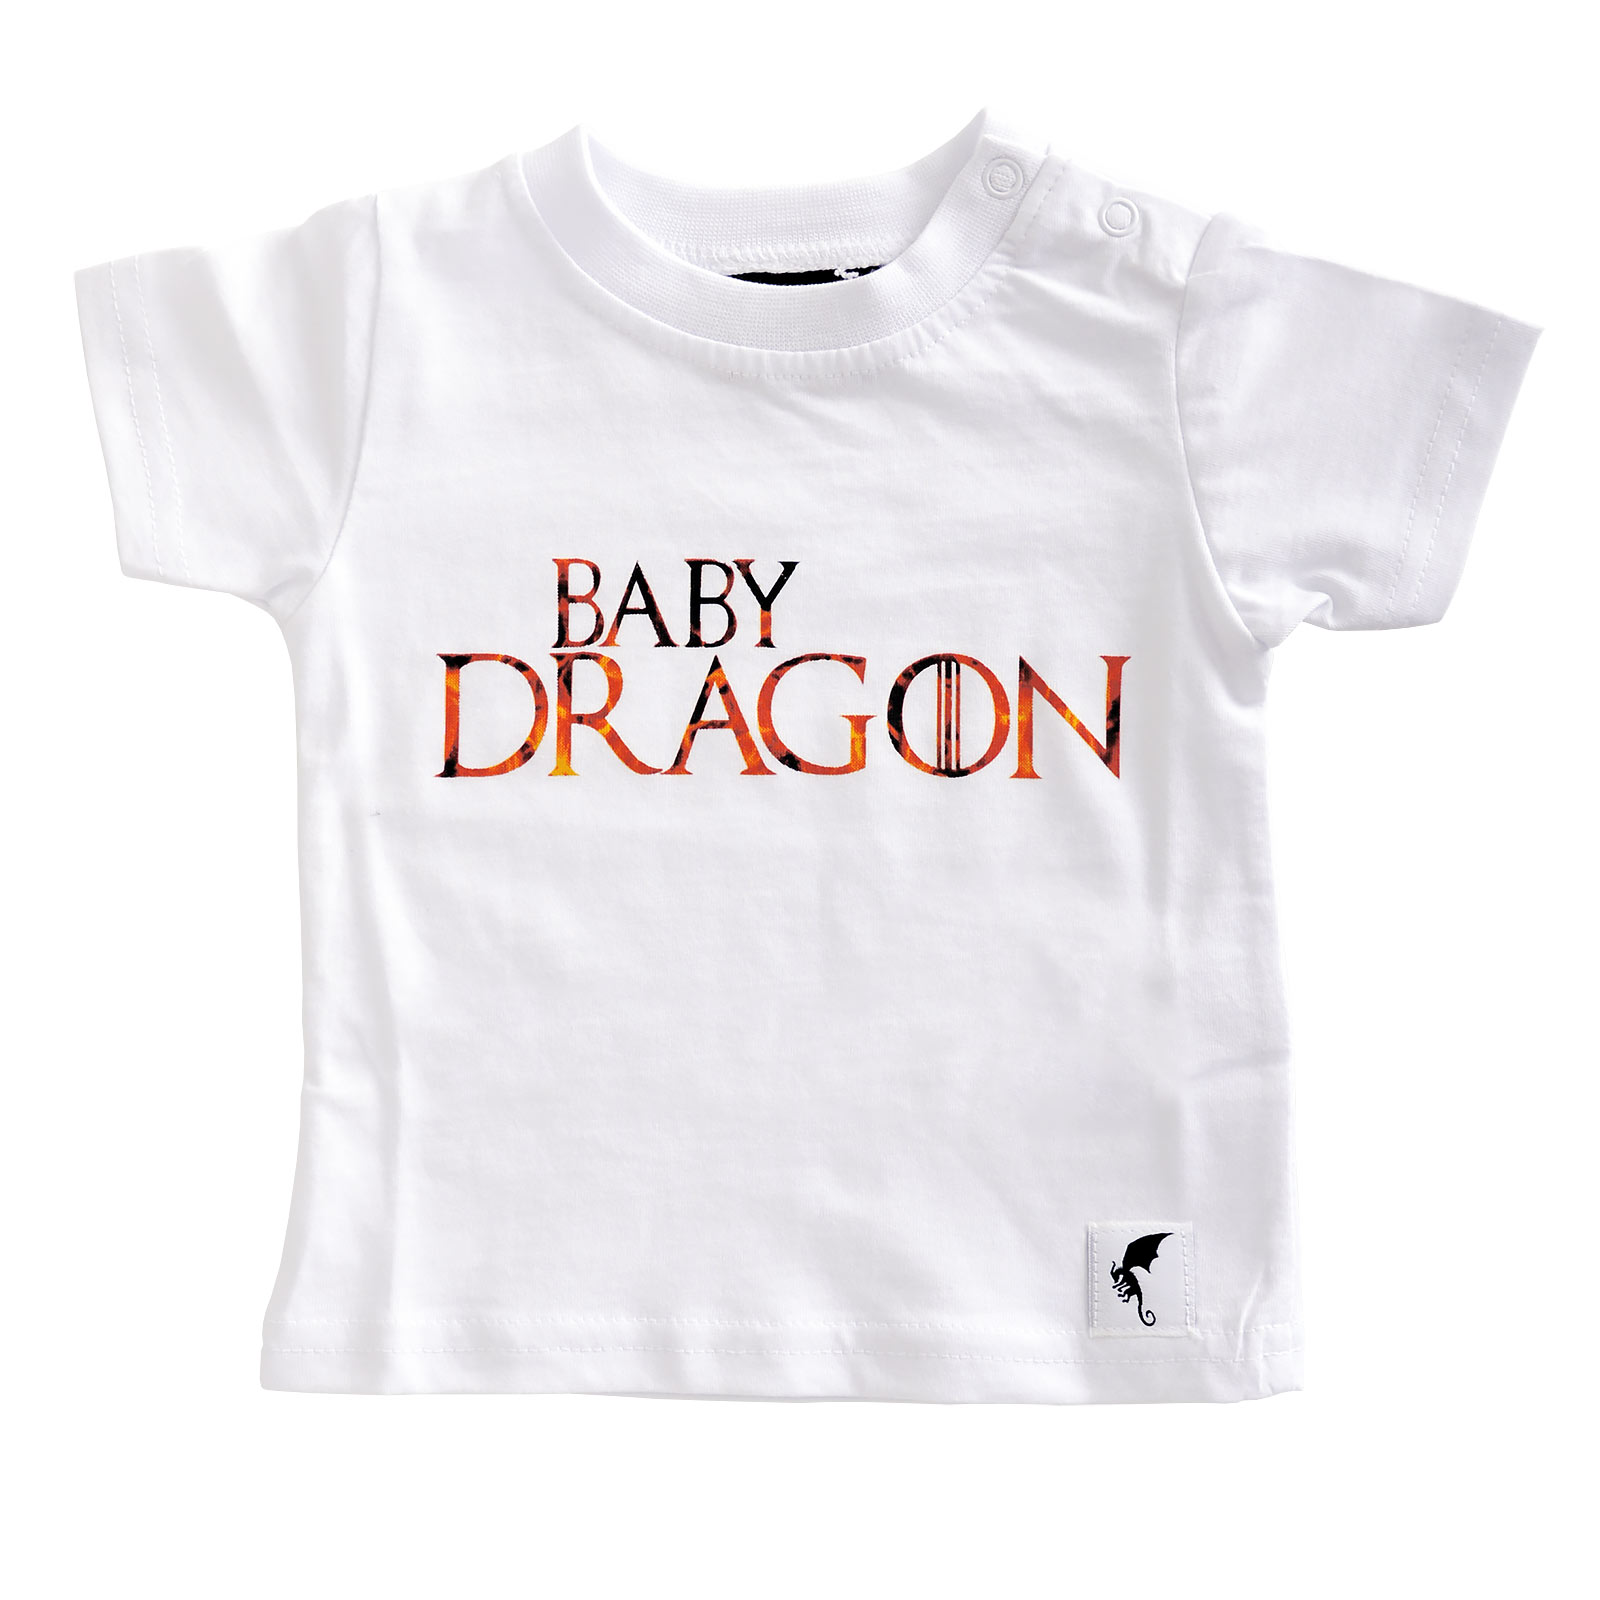 Baby Dragon - Kinder T-Shirt weiß